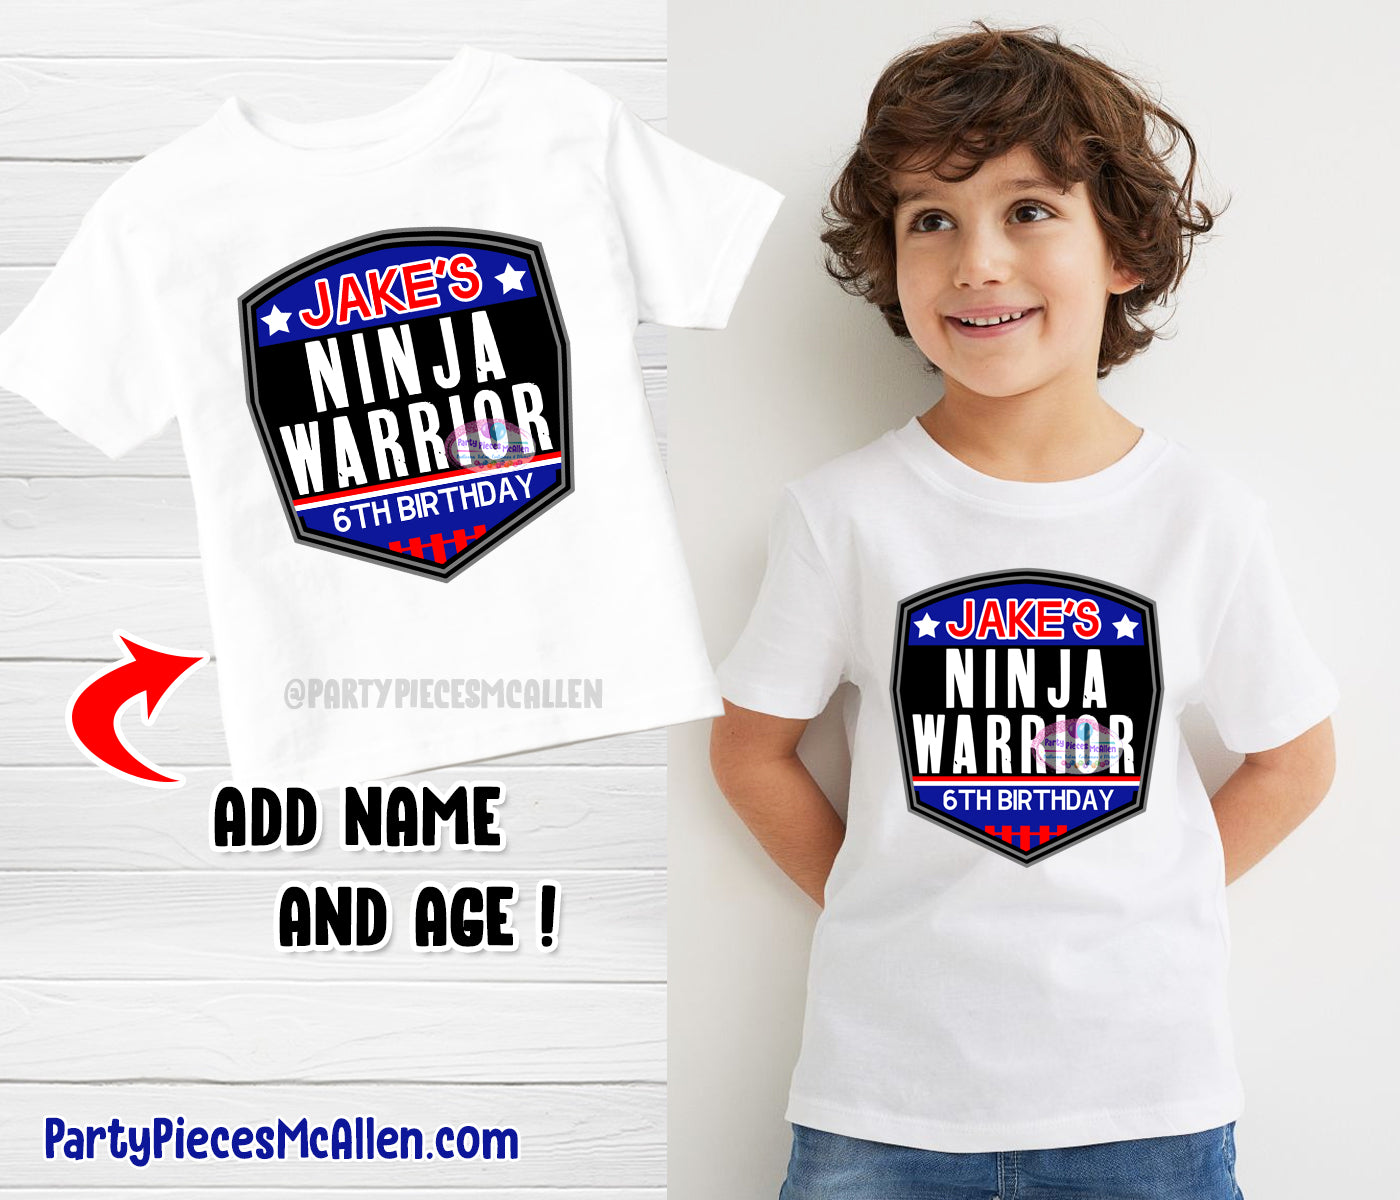 Personalized American Ninja Warrior in Training Kids T-Shirt Royal / Xs